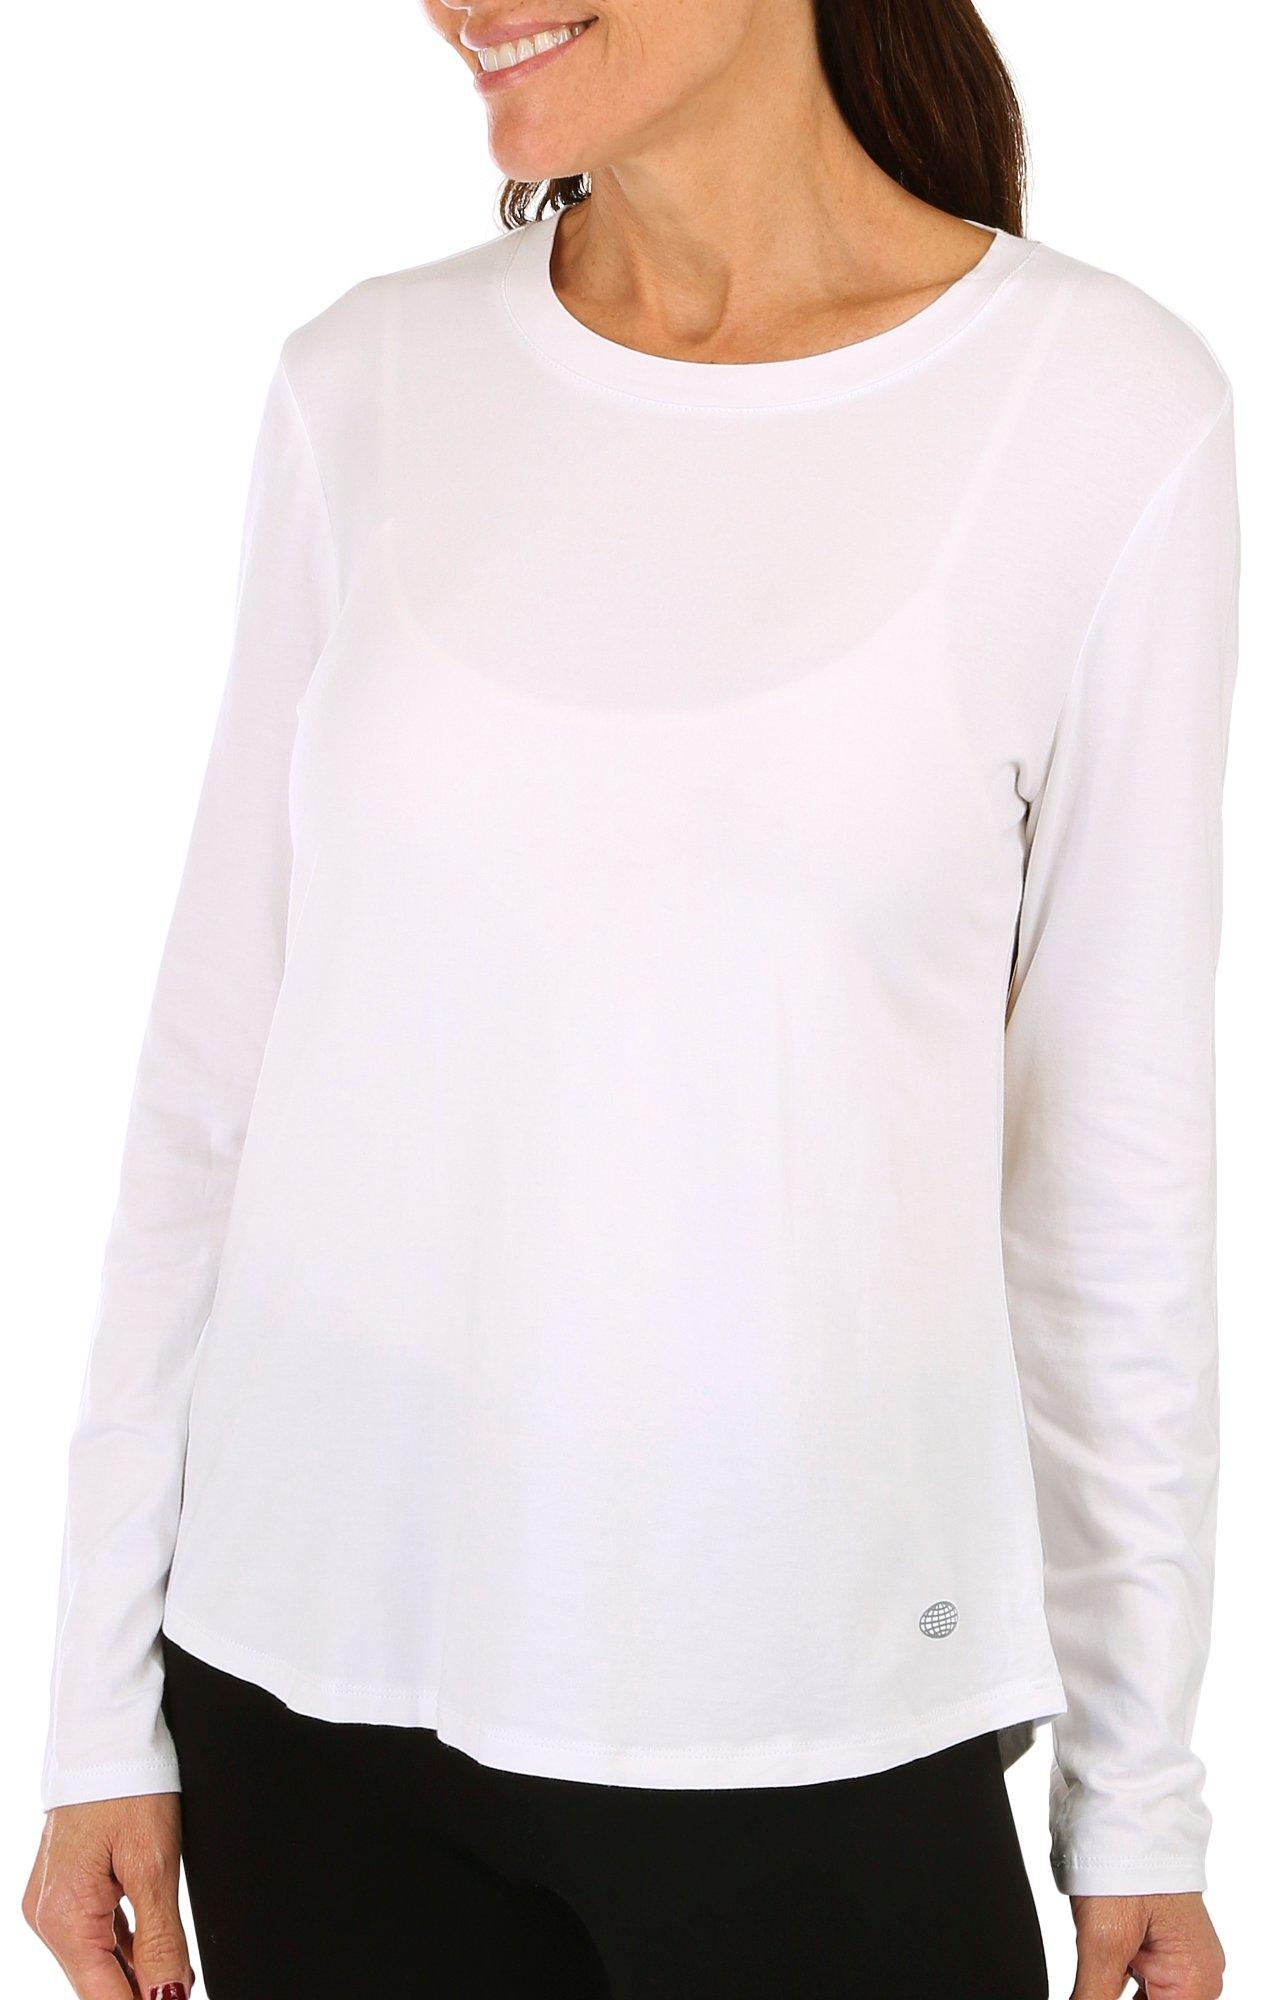 Reel Legends Womens UPF 50 Solid Long Sleeve Top - Bright White - Medium